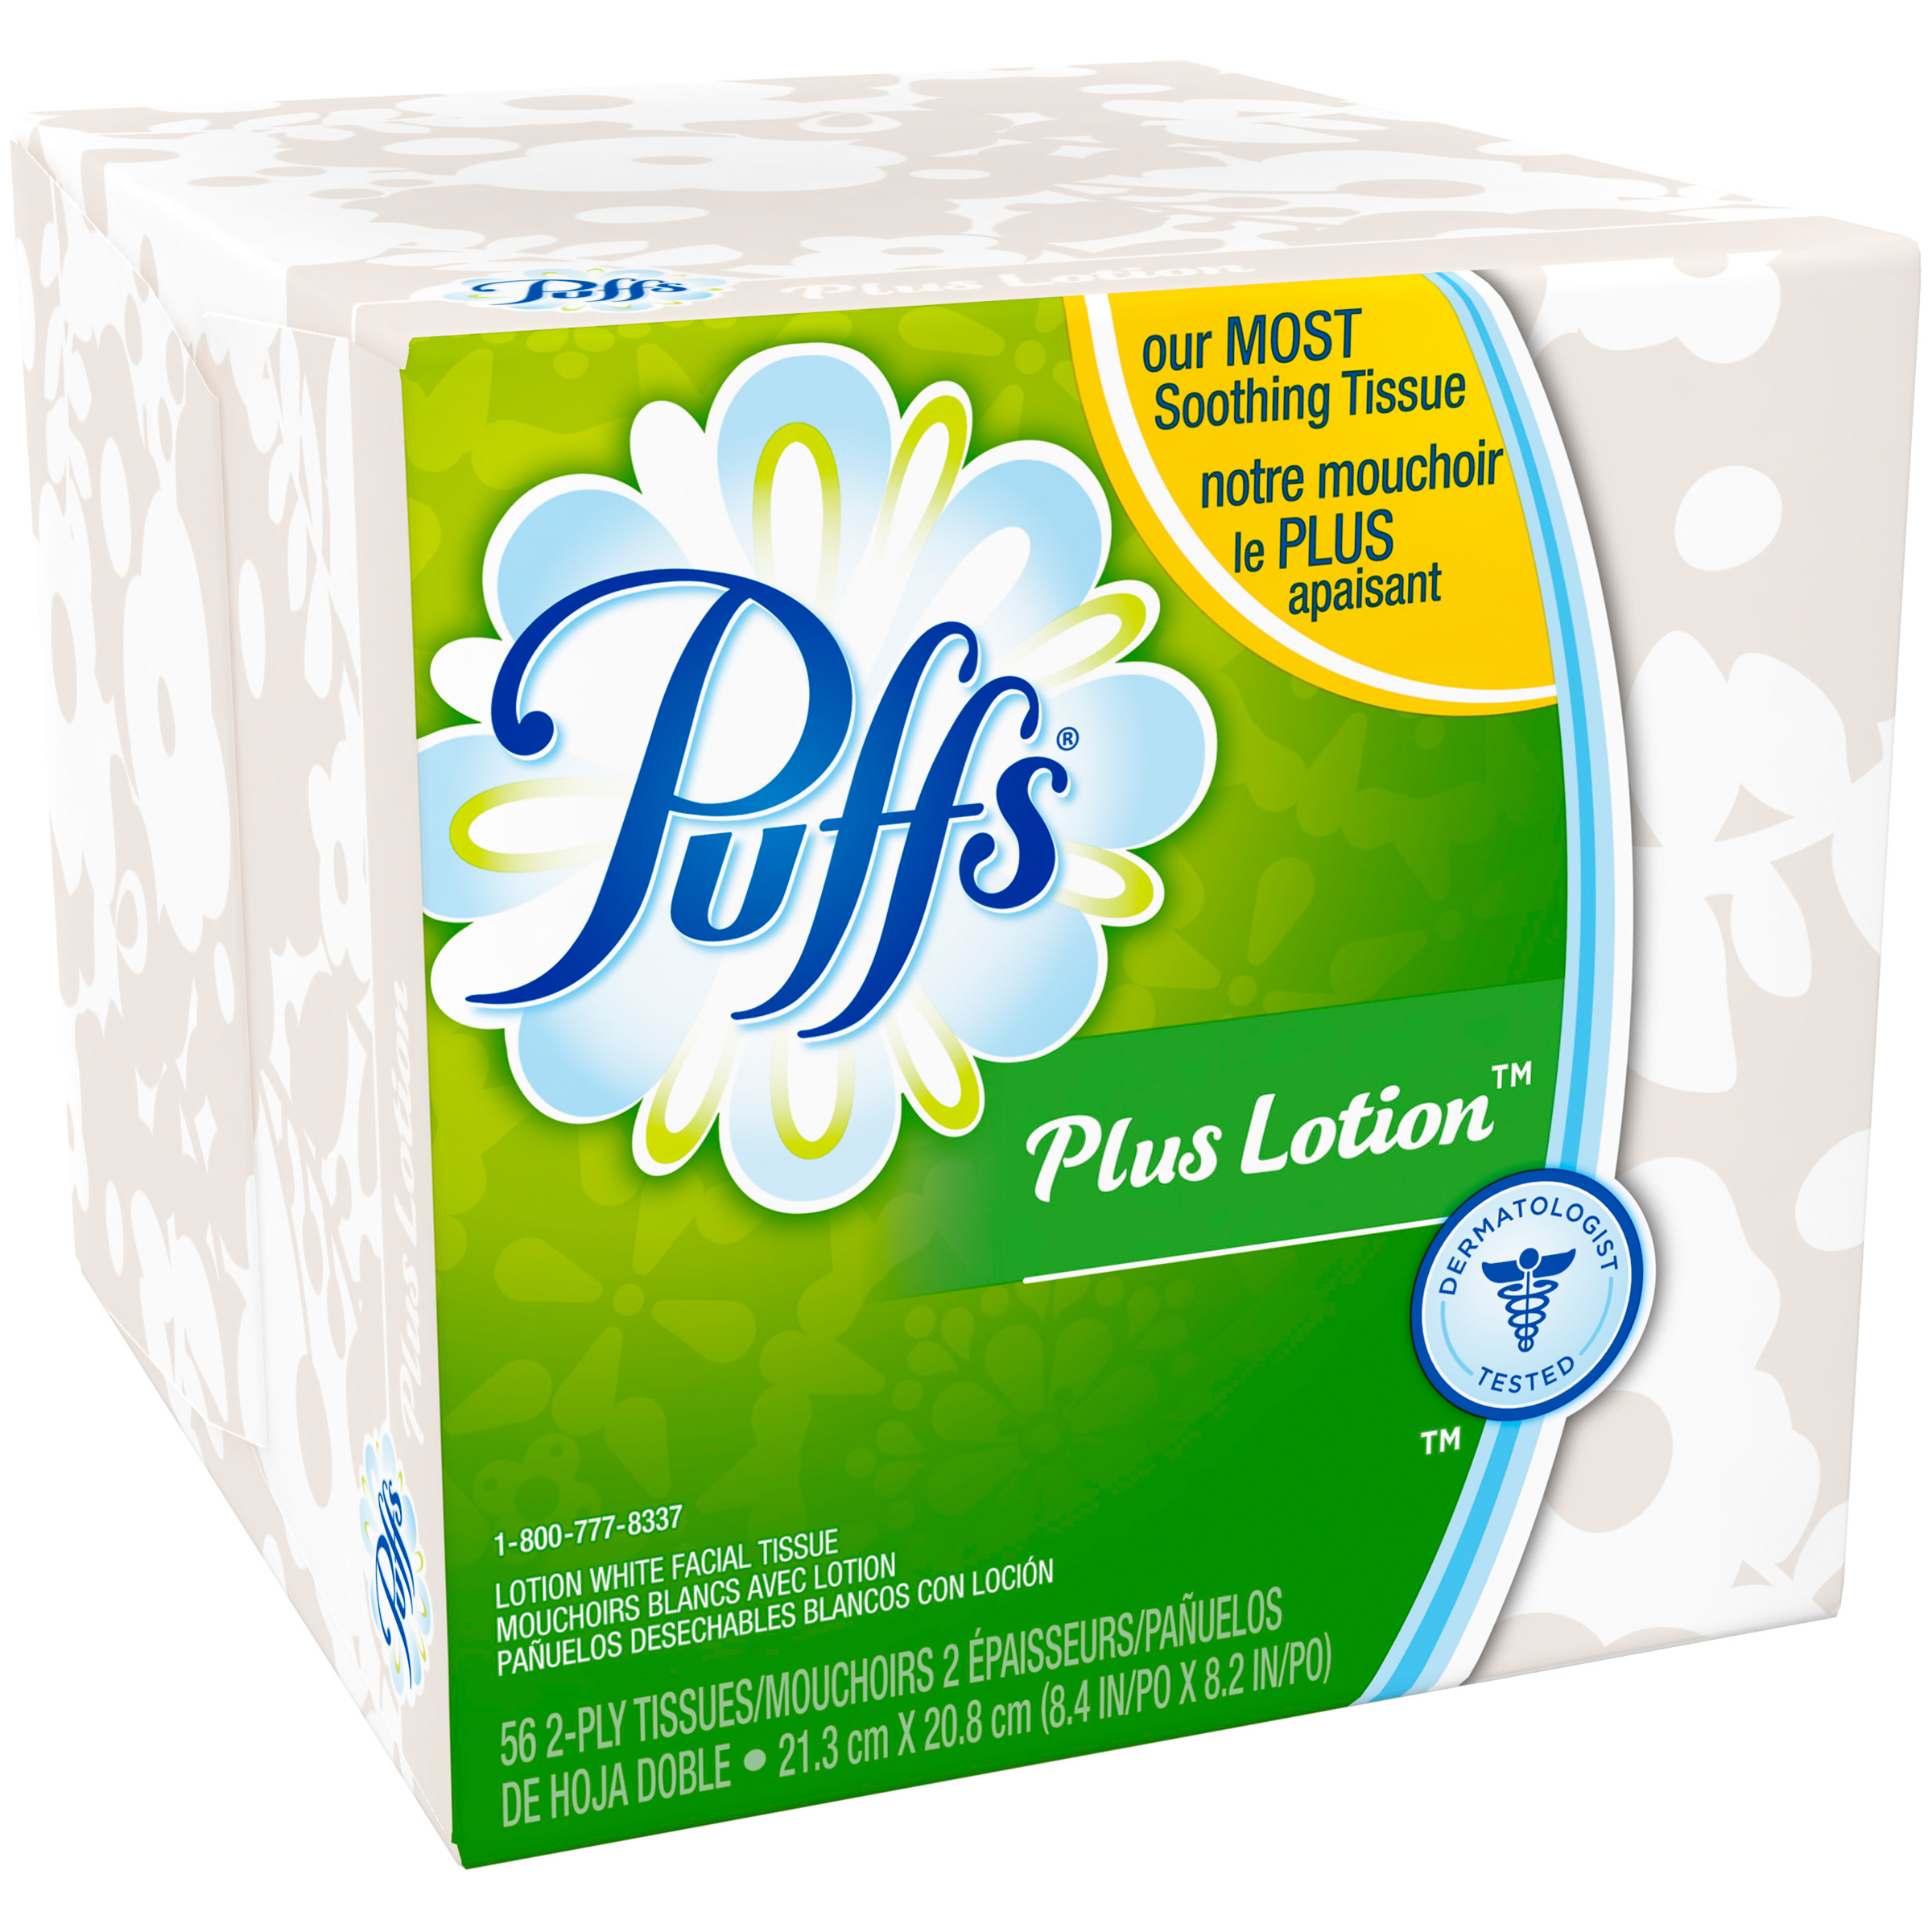 Puffs Facial Tissue Plus Lotion, White, 2-Ply 56 tissues